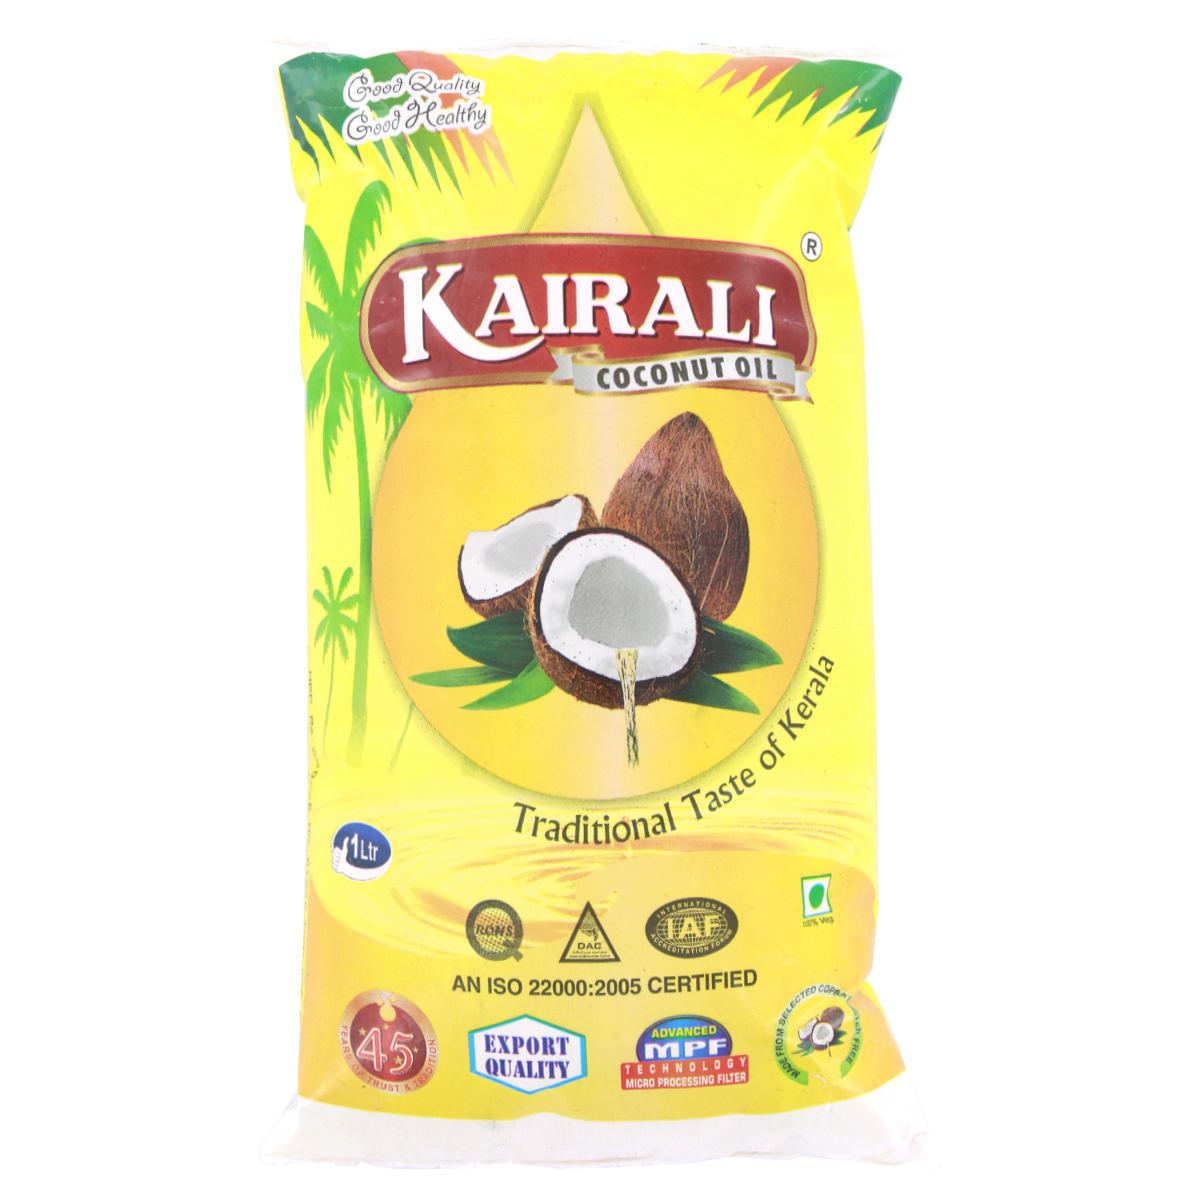 Kairali Coconut Oil 1 Liter